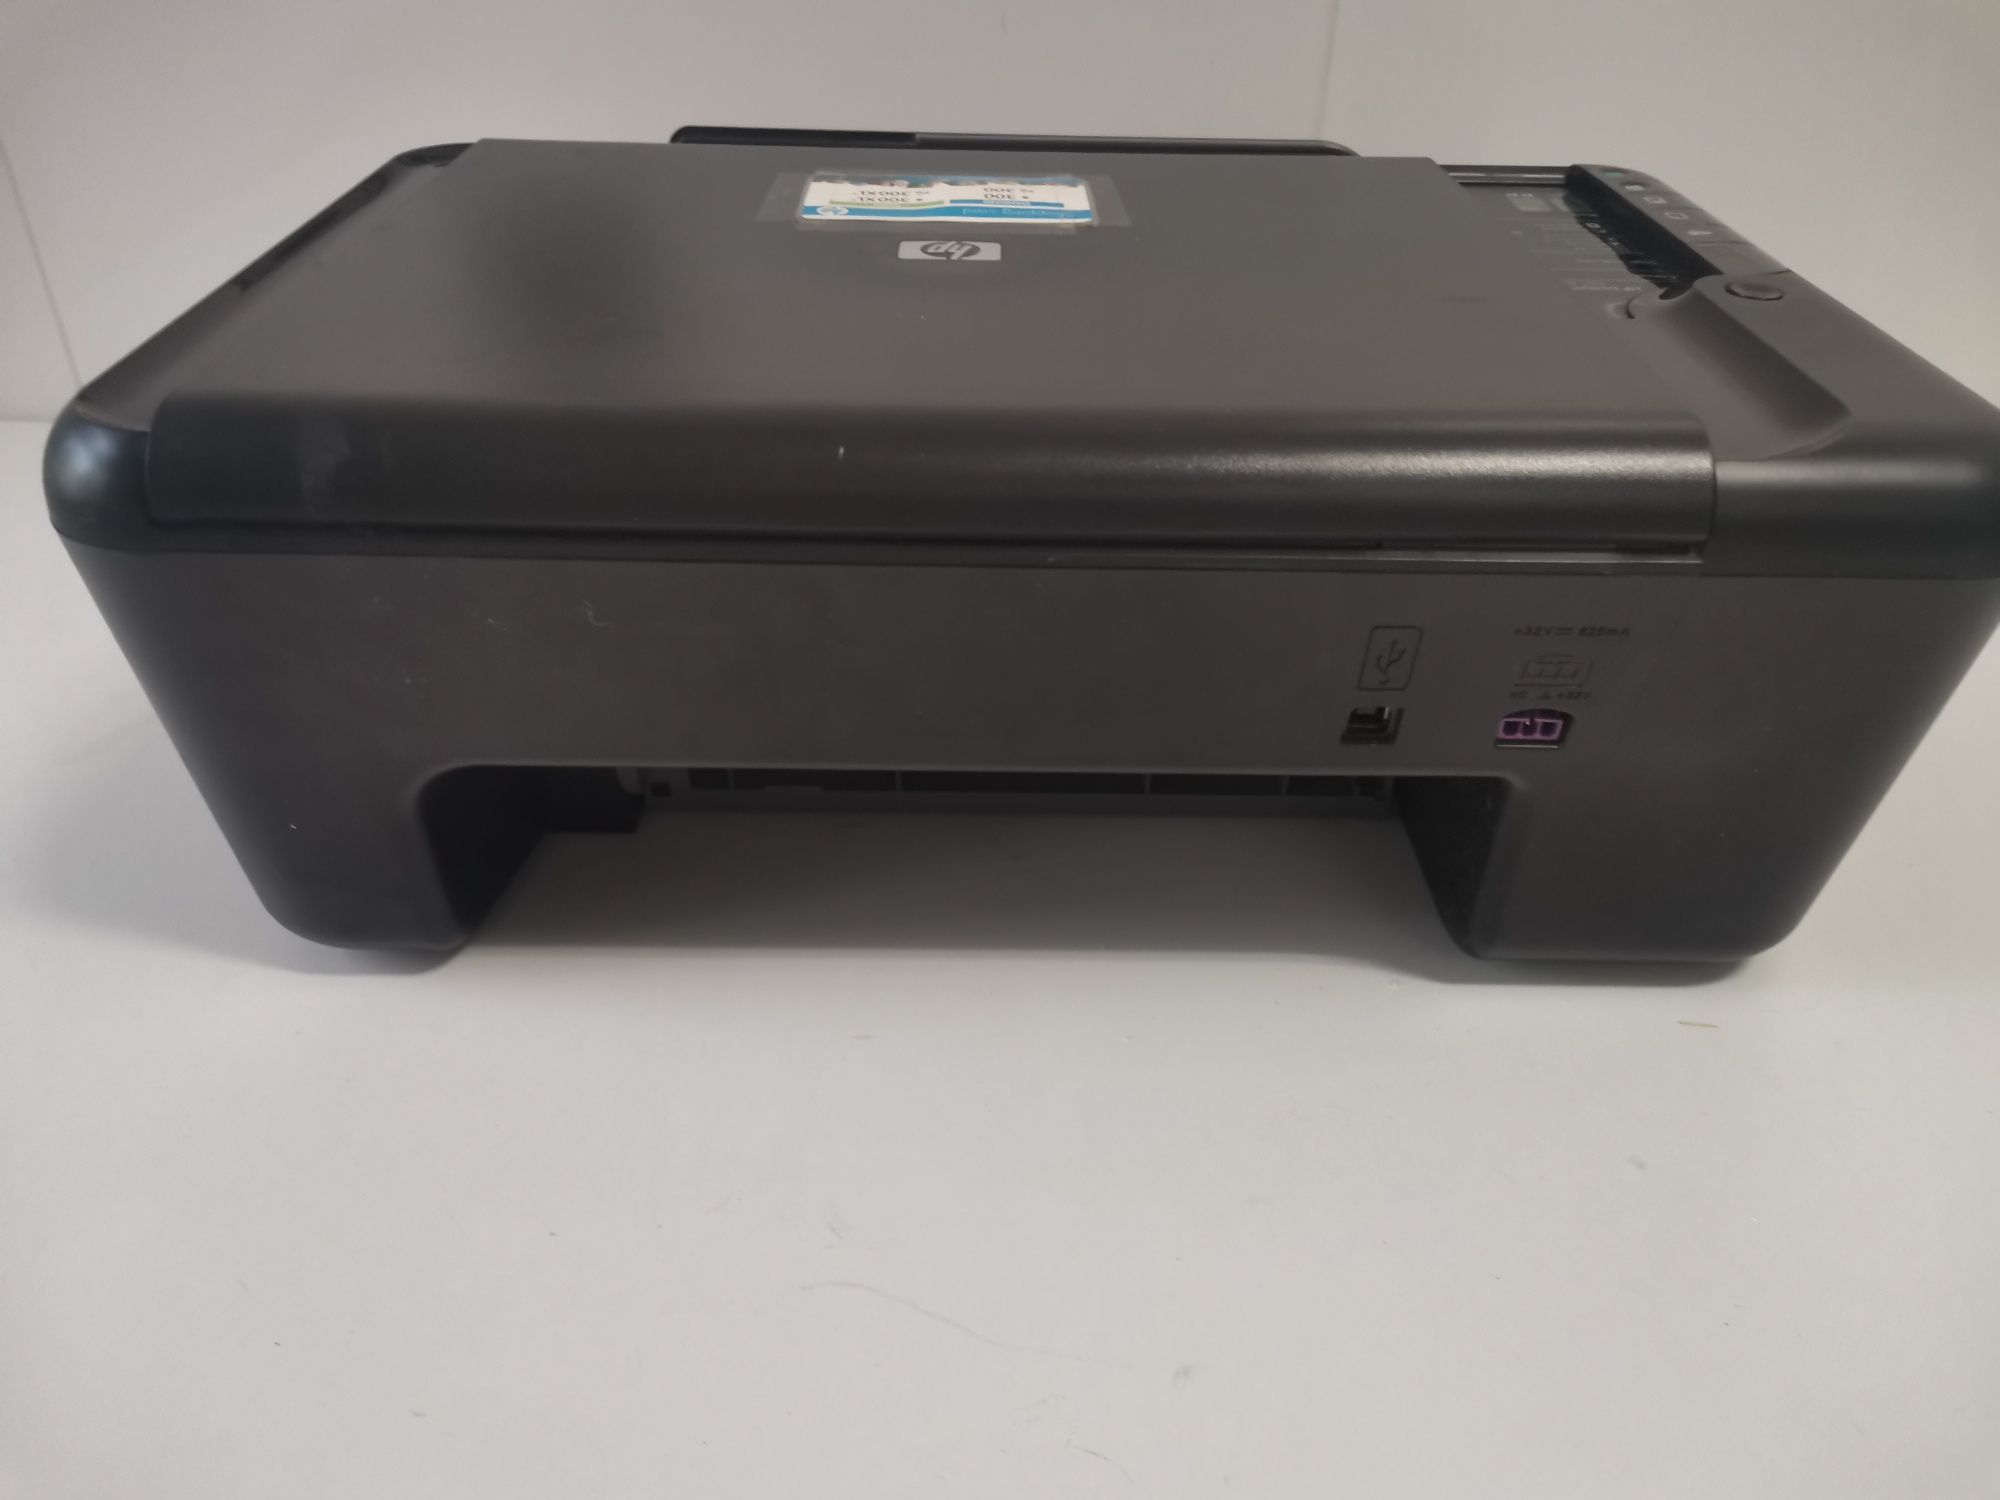 Impressora HP F4580 wifi print, scan, copy